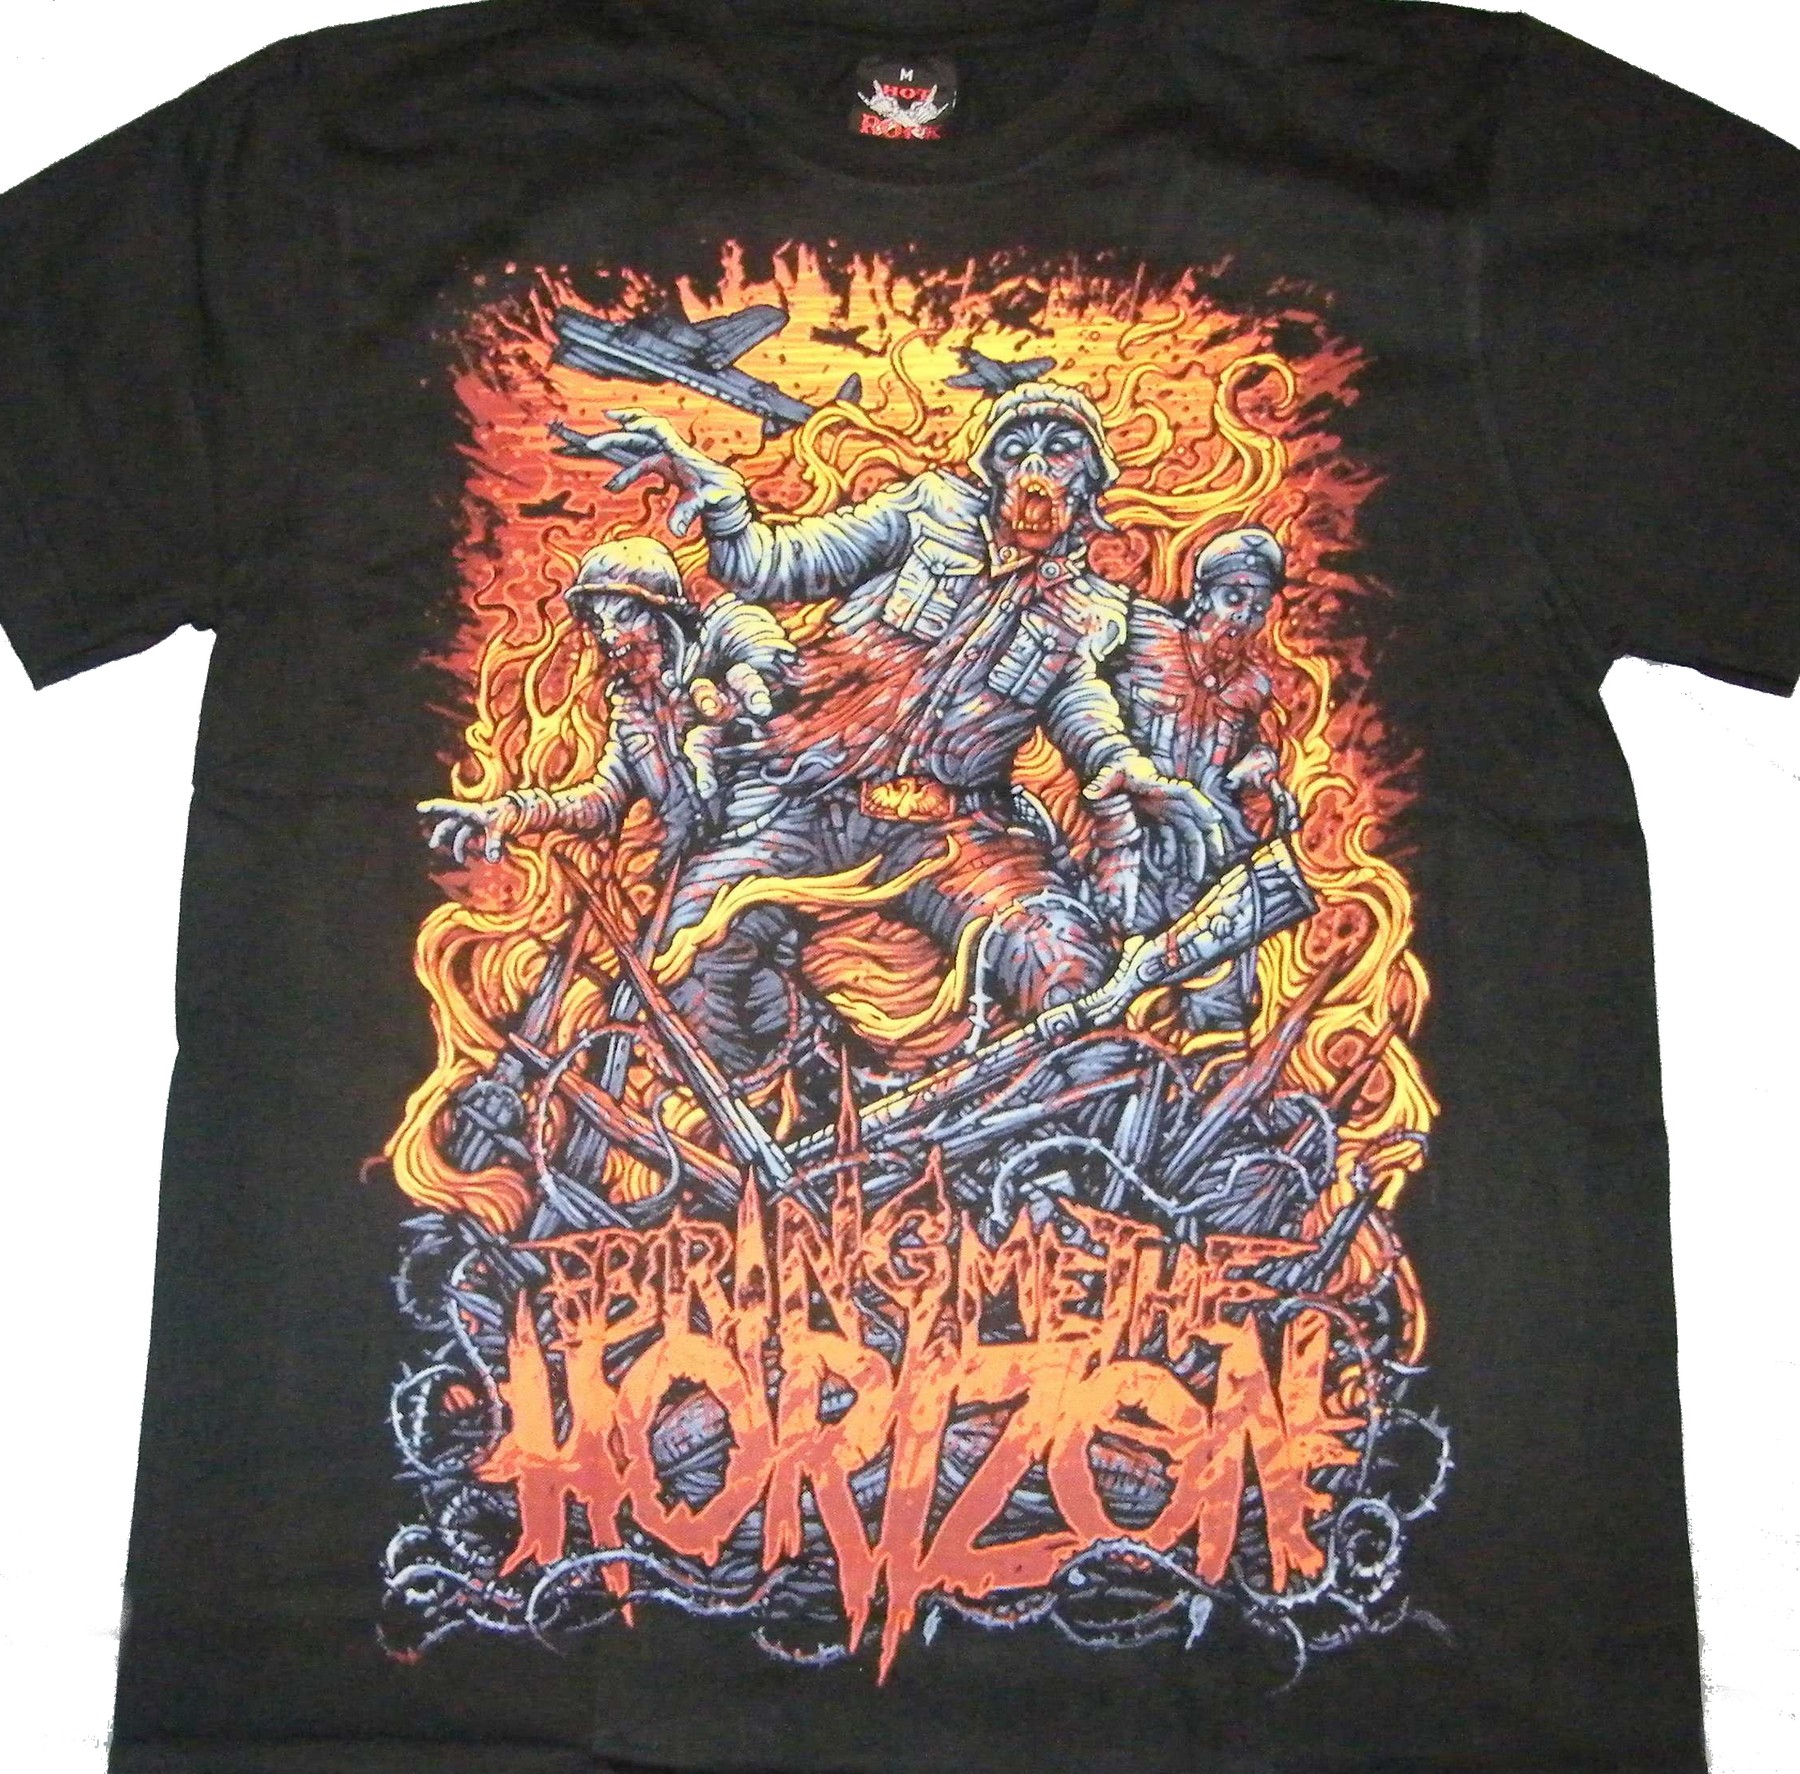 Bring Me The Horizon t-shirt size XL